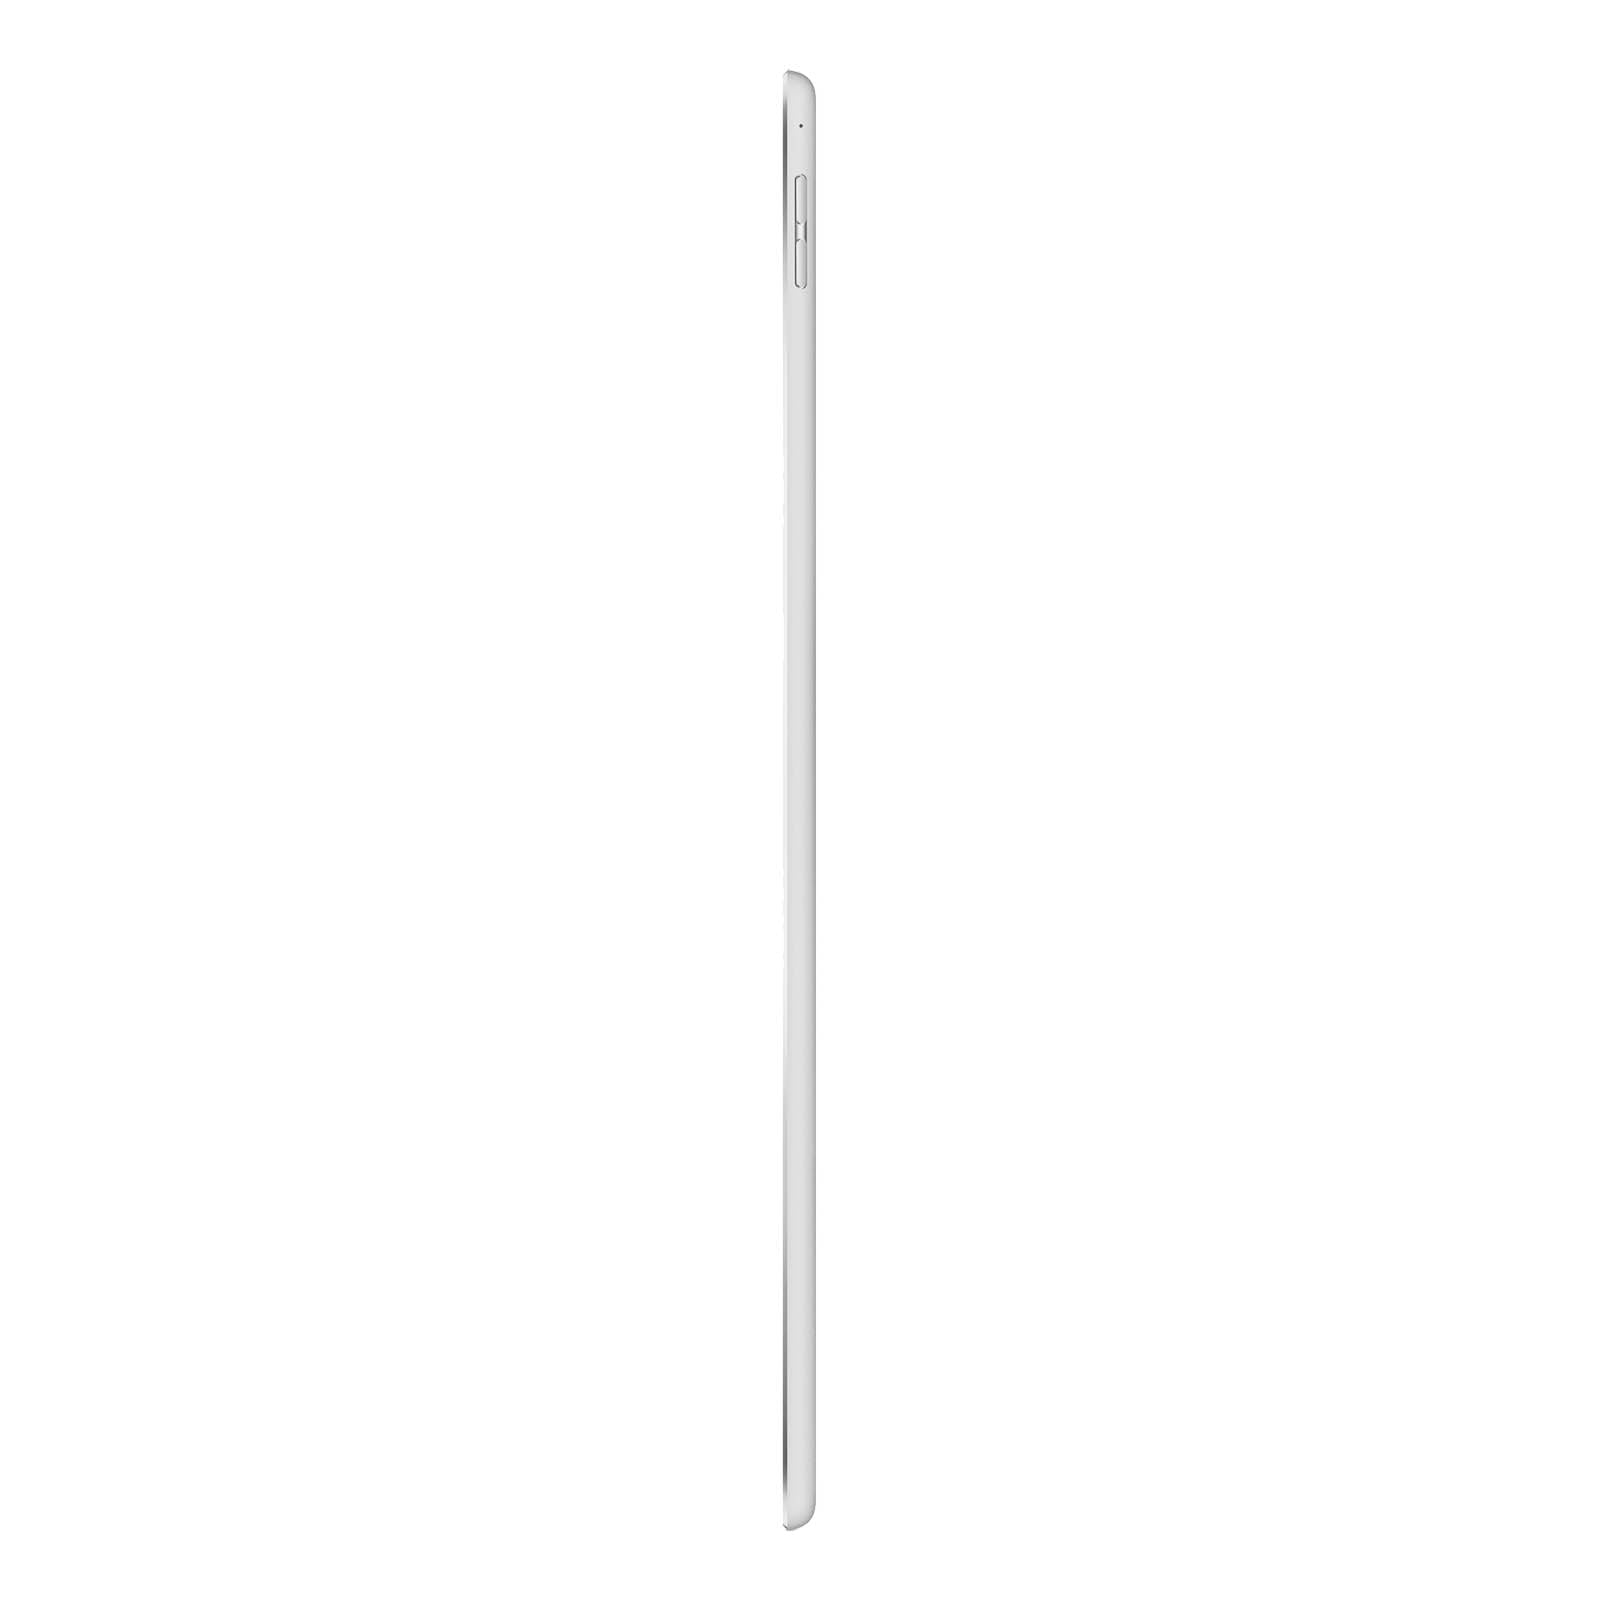 iPad Pro 12.9 Inch 1st Gen 128GB Silver Pristine - WiFi